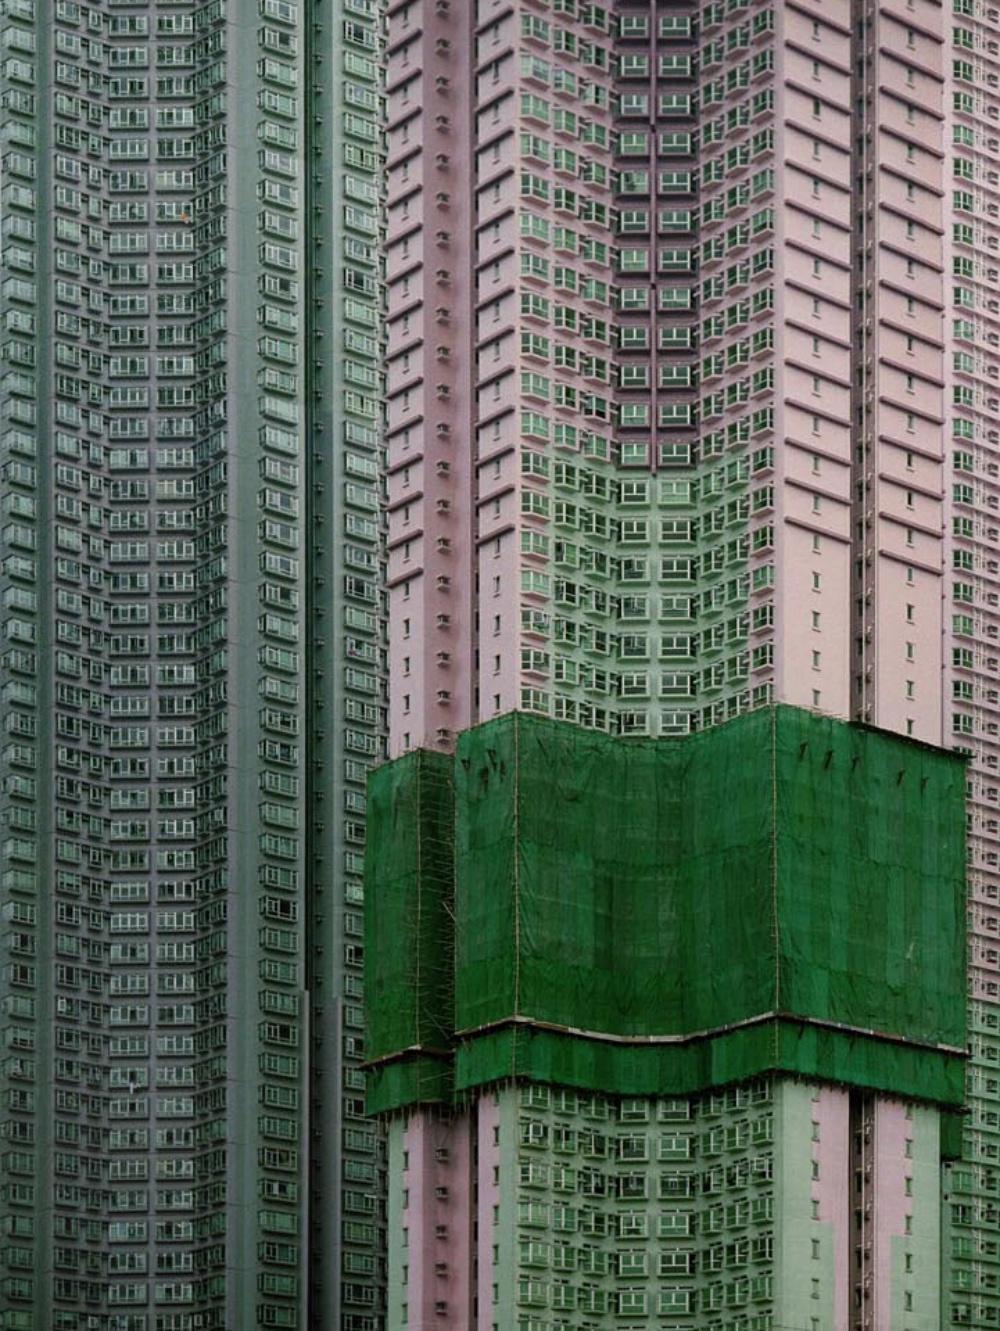 Architecture of Density #12 – Michael Wolf, City, Skyscraper, Architecture, Art For Sale 1